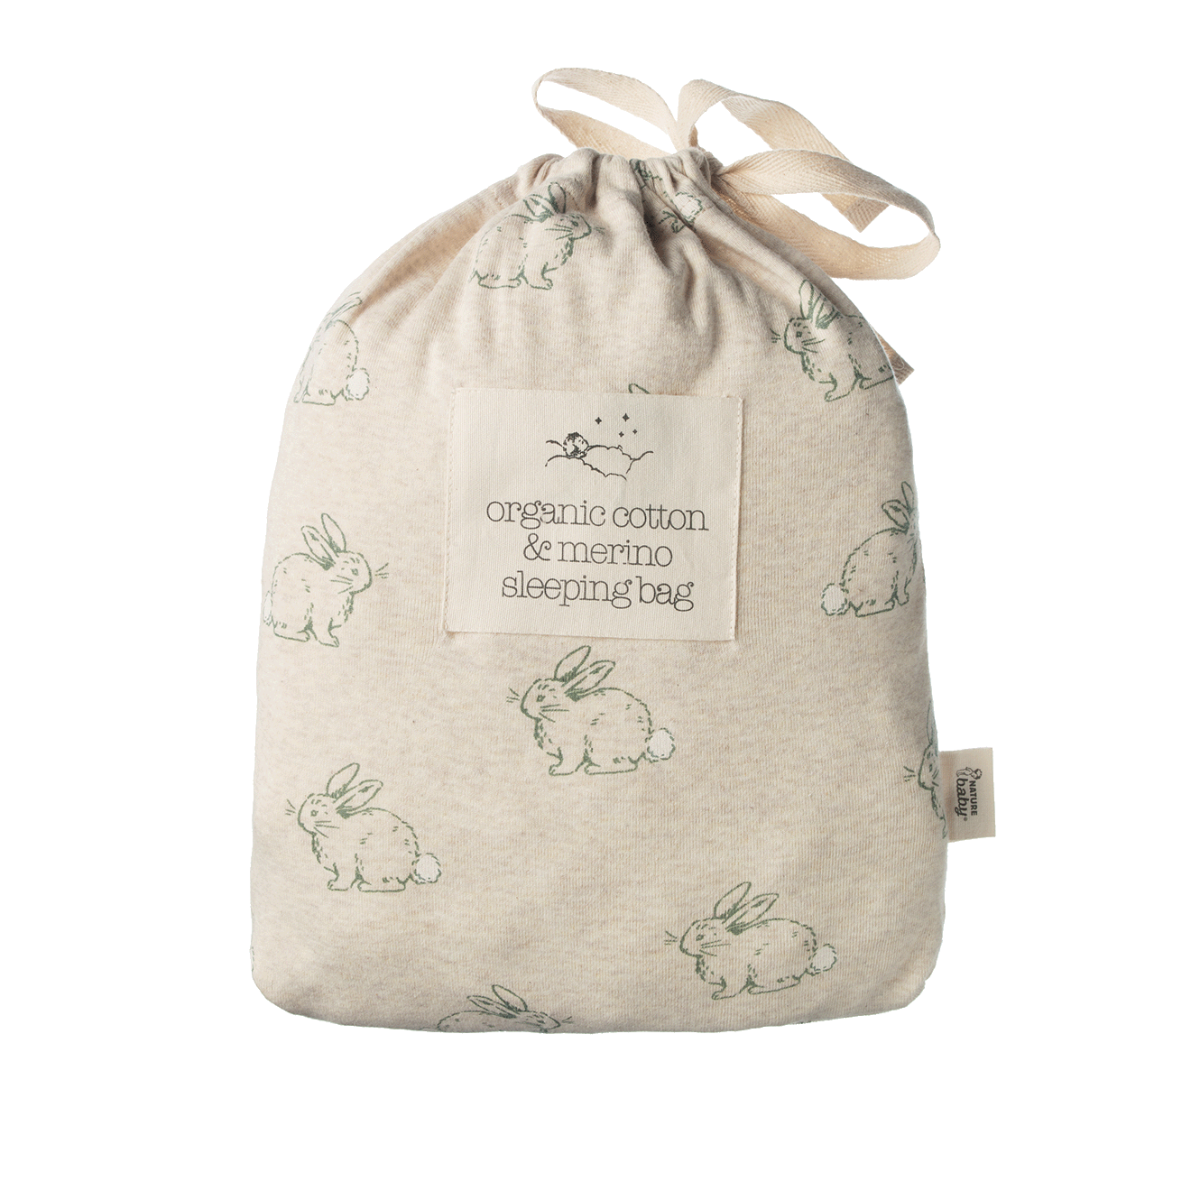 Organic Cotton & Merino Sleeping Bag - Cottage Bunny Oatmeal Marl Print